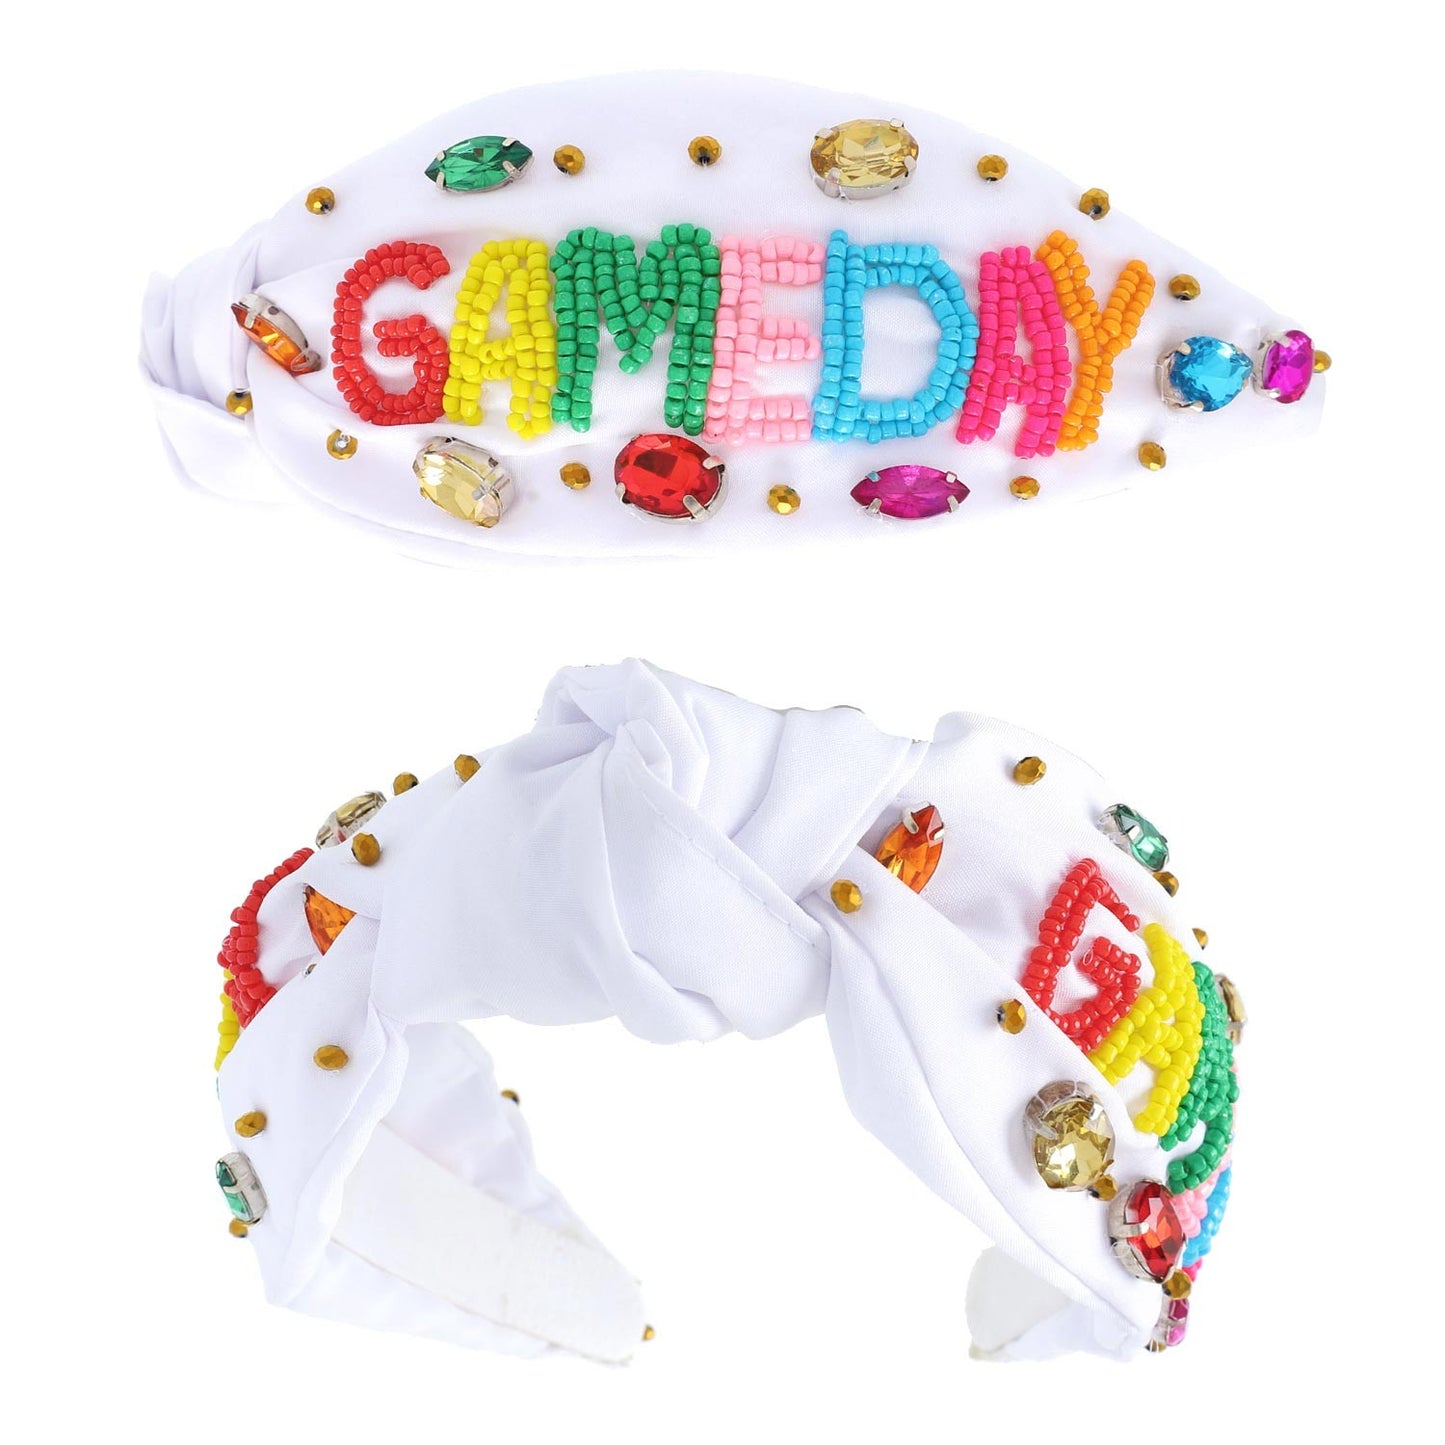 "Game Day" Headband